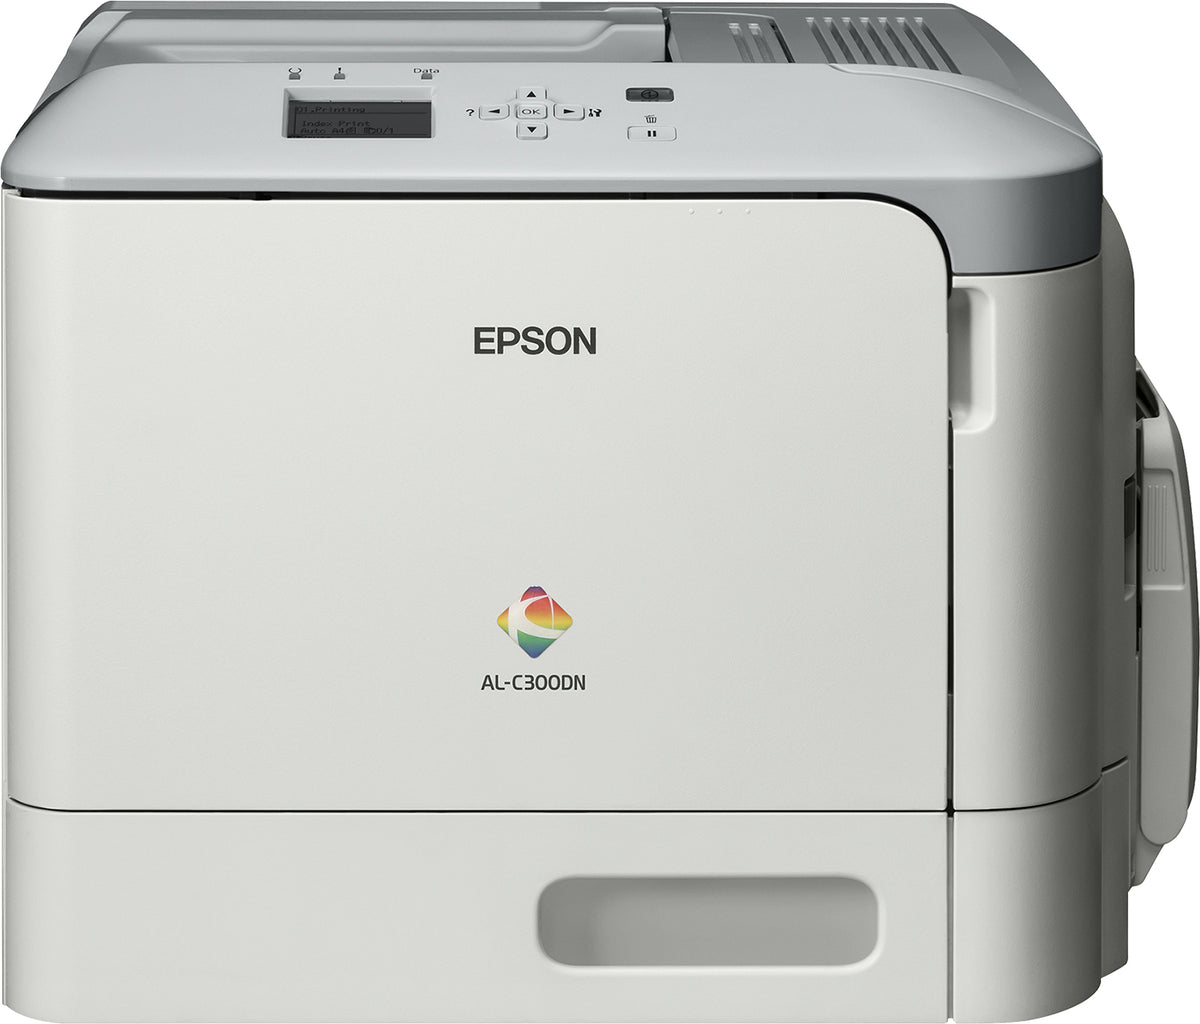 Epson AL-C300DN - Printer - color - Duplex - laser - A4/Legal - 1200 x 1200 dpi - up to 31 ppm (mono) / up to 31 ppm (color) - capacity: 350 sheets - USB 2.0, Gigabit LAN, USB host